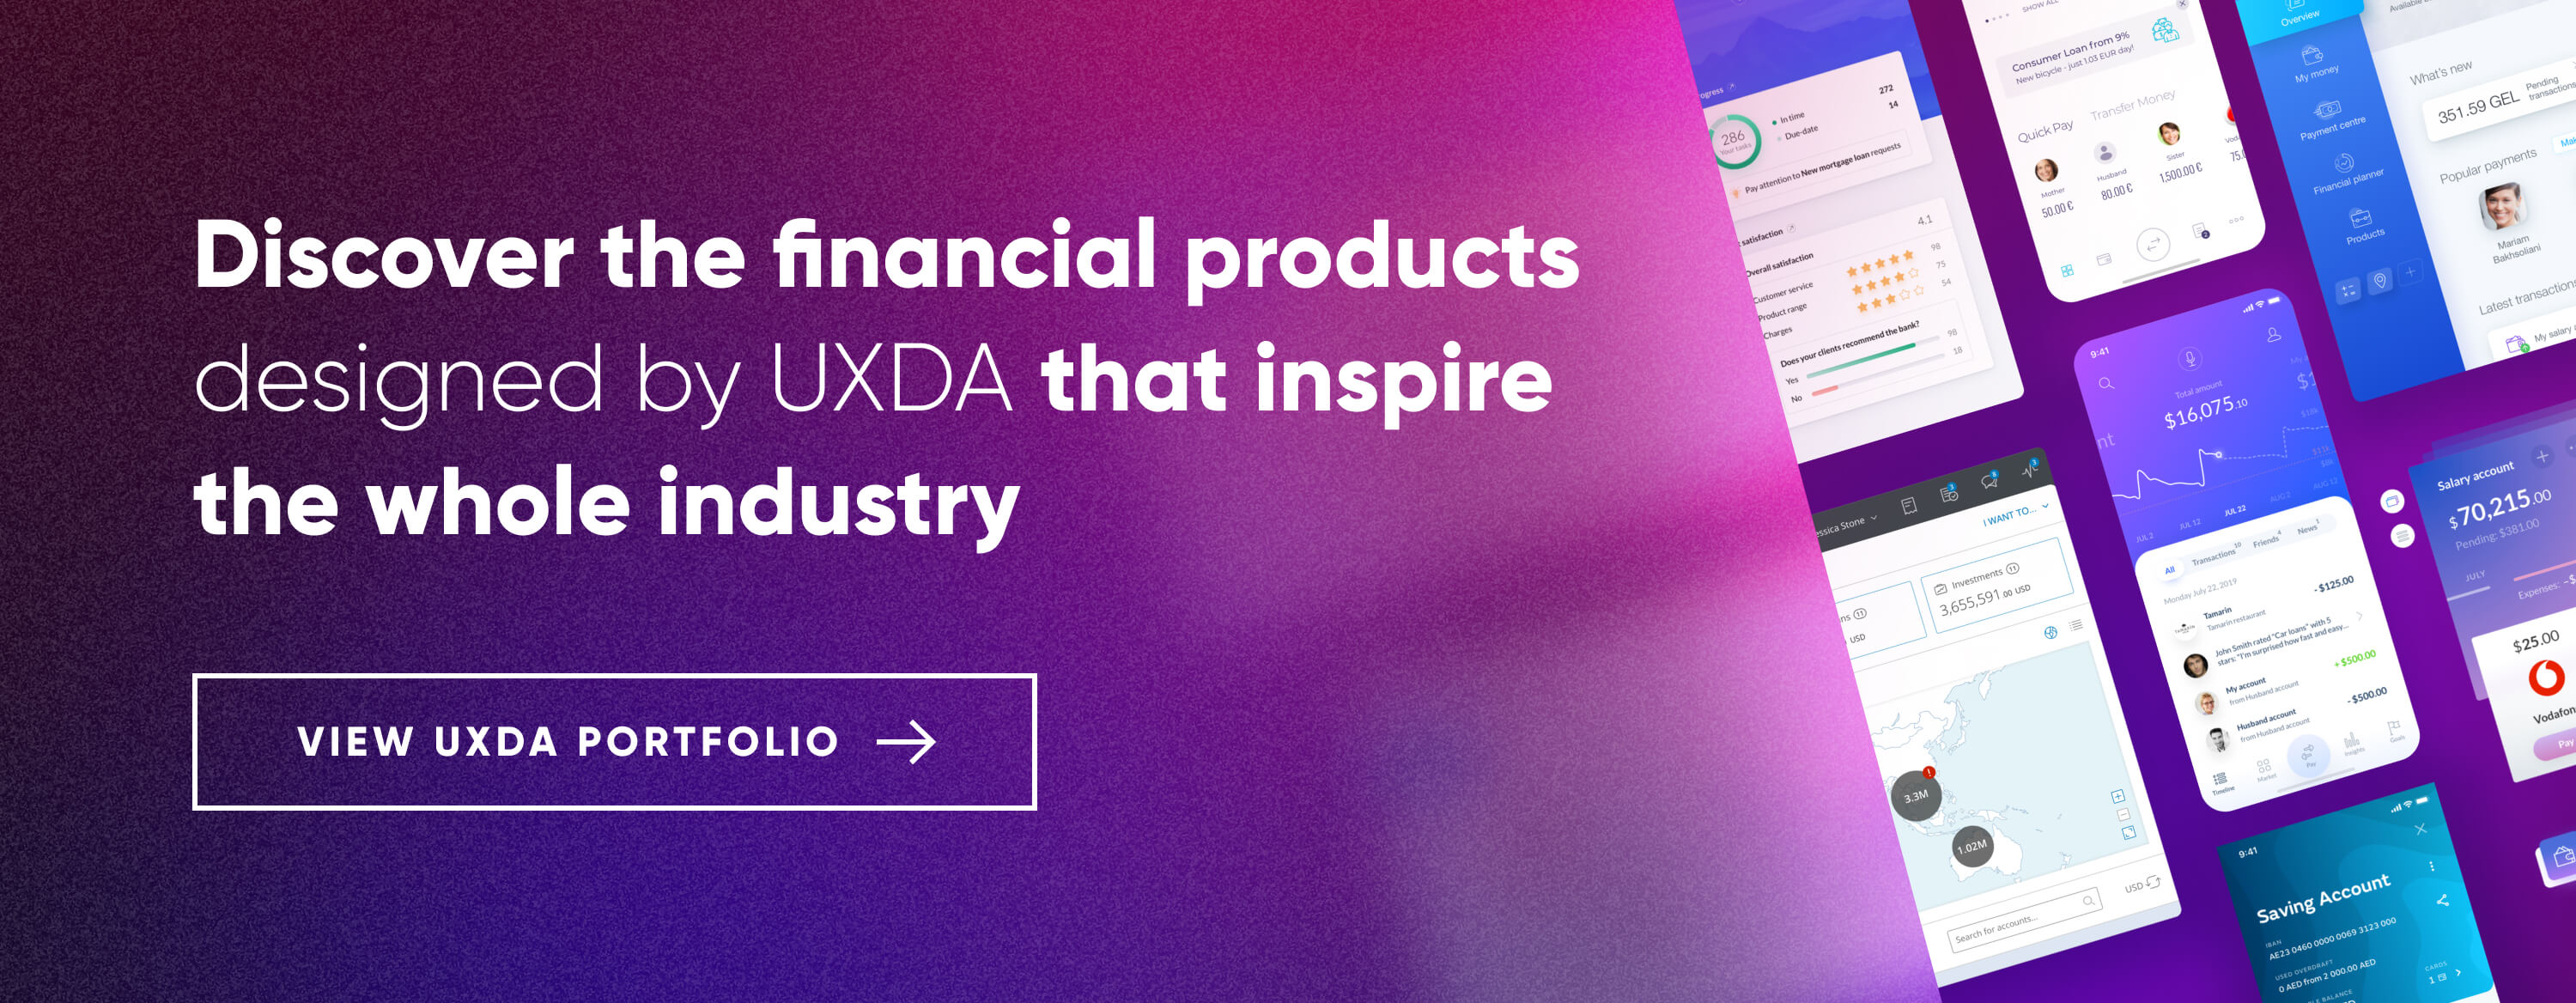 uxda-portfolio-financial-digital-product-inspire-industry-ux-1667397788.jpg